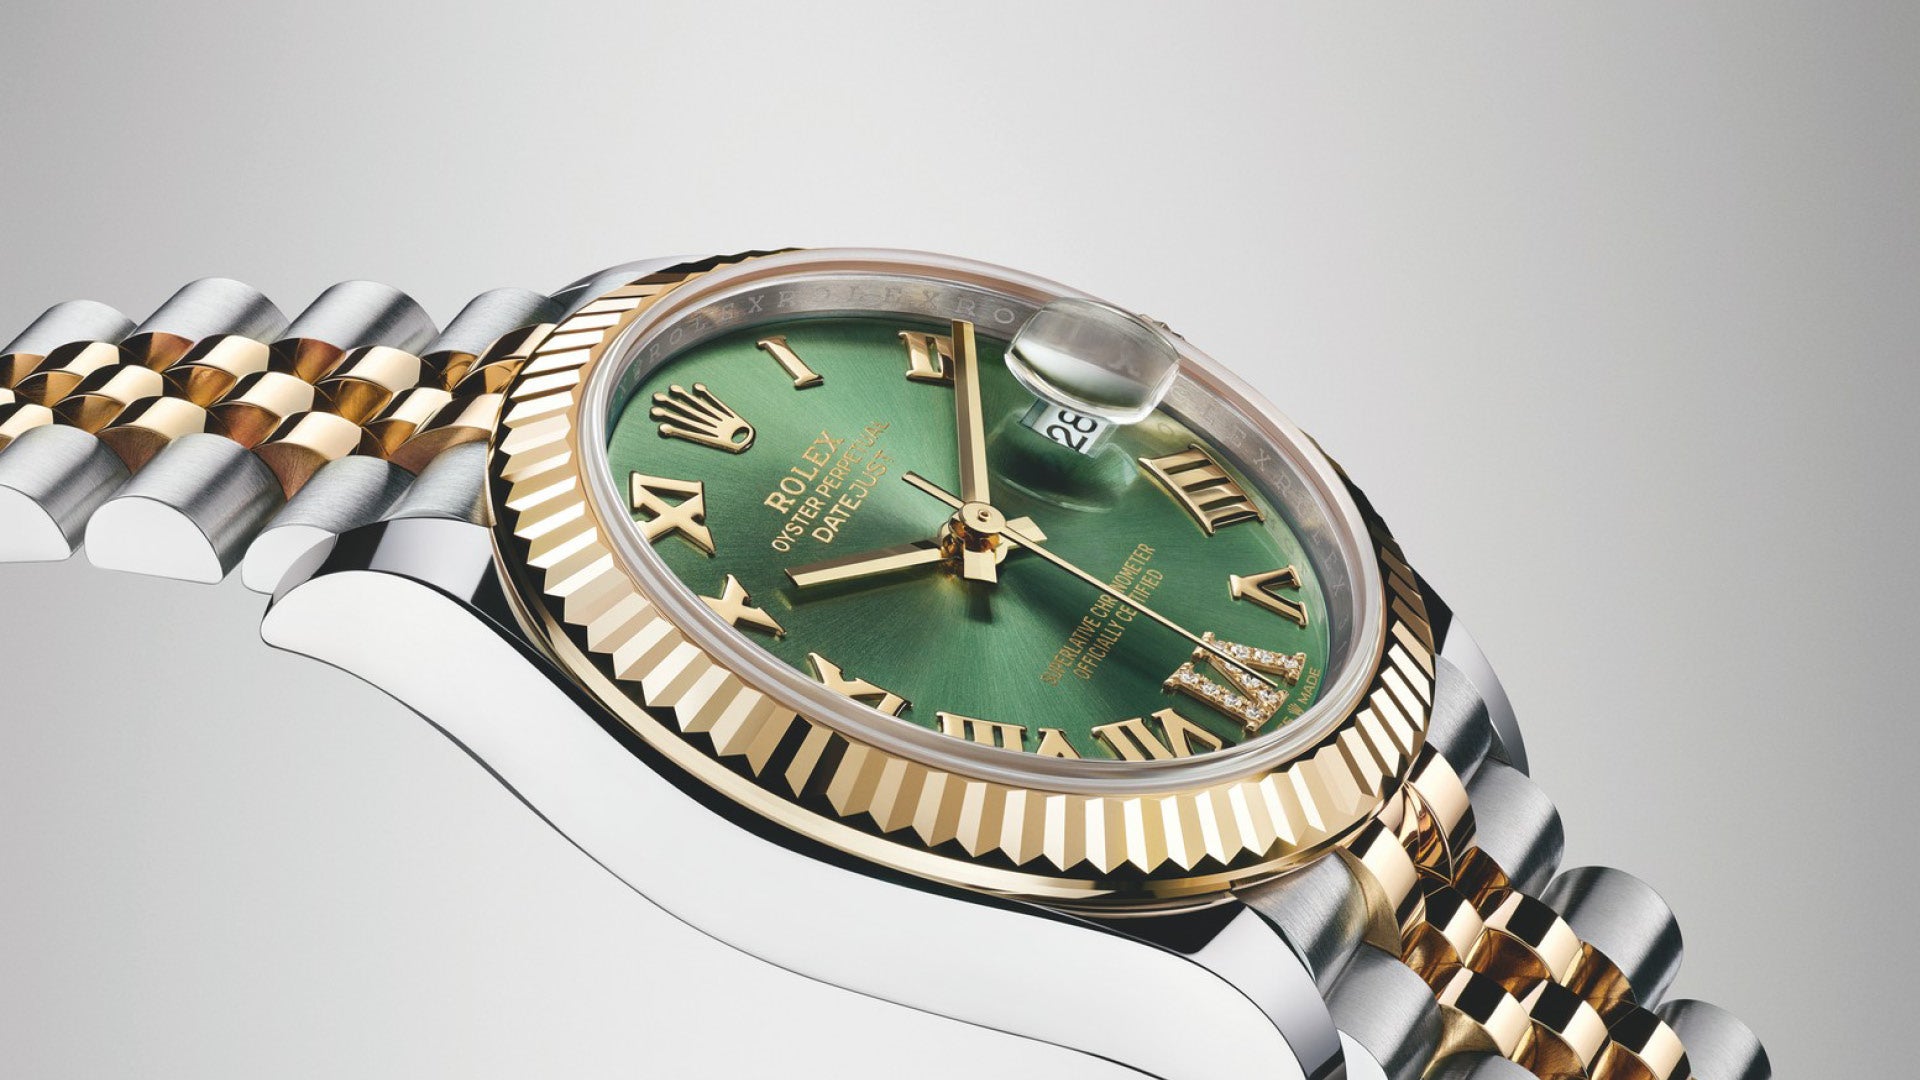 Rolex Watch - Lux Watch Winders